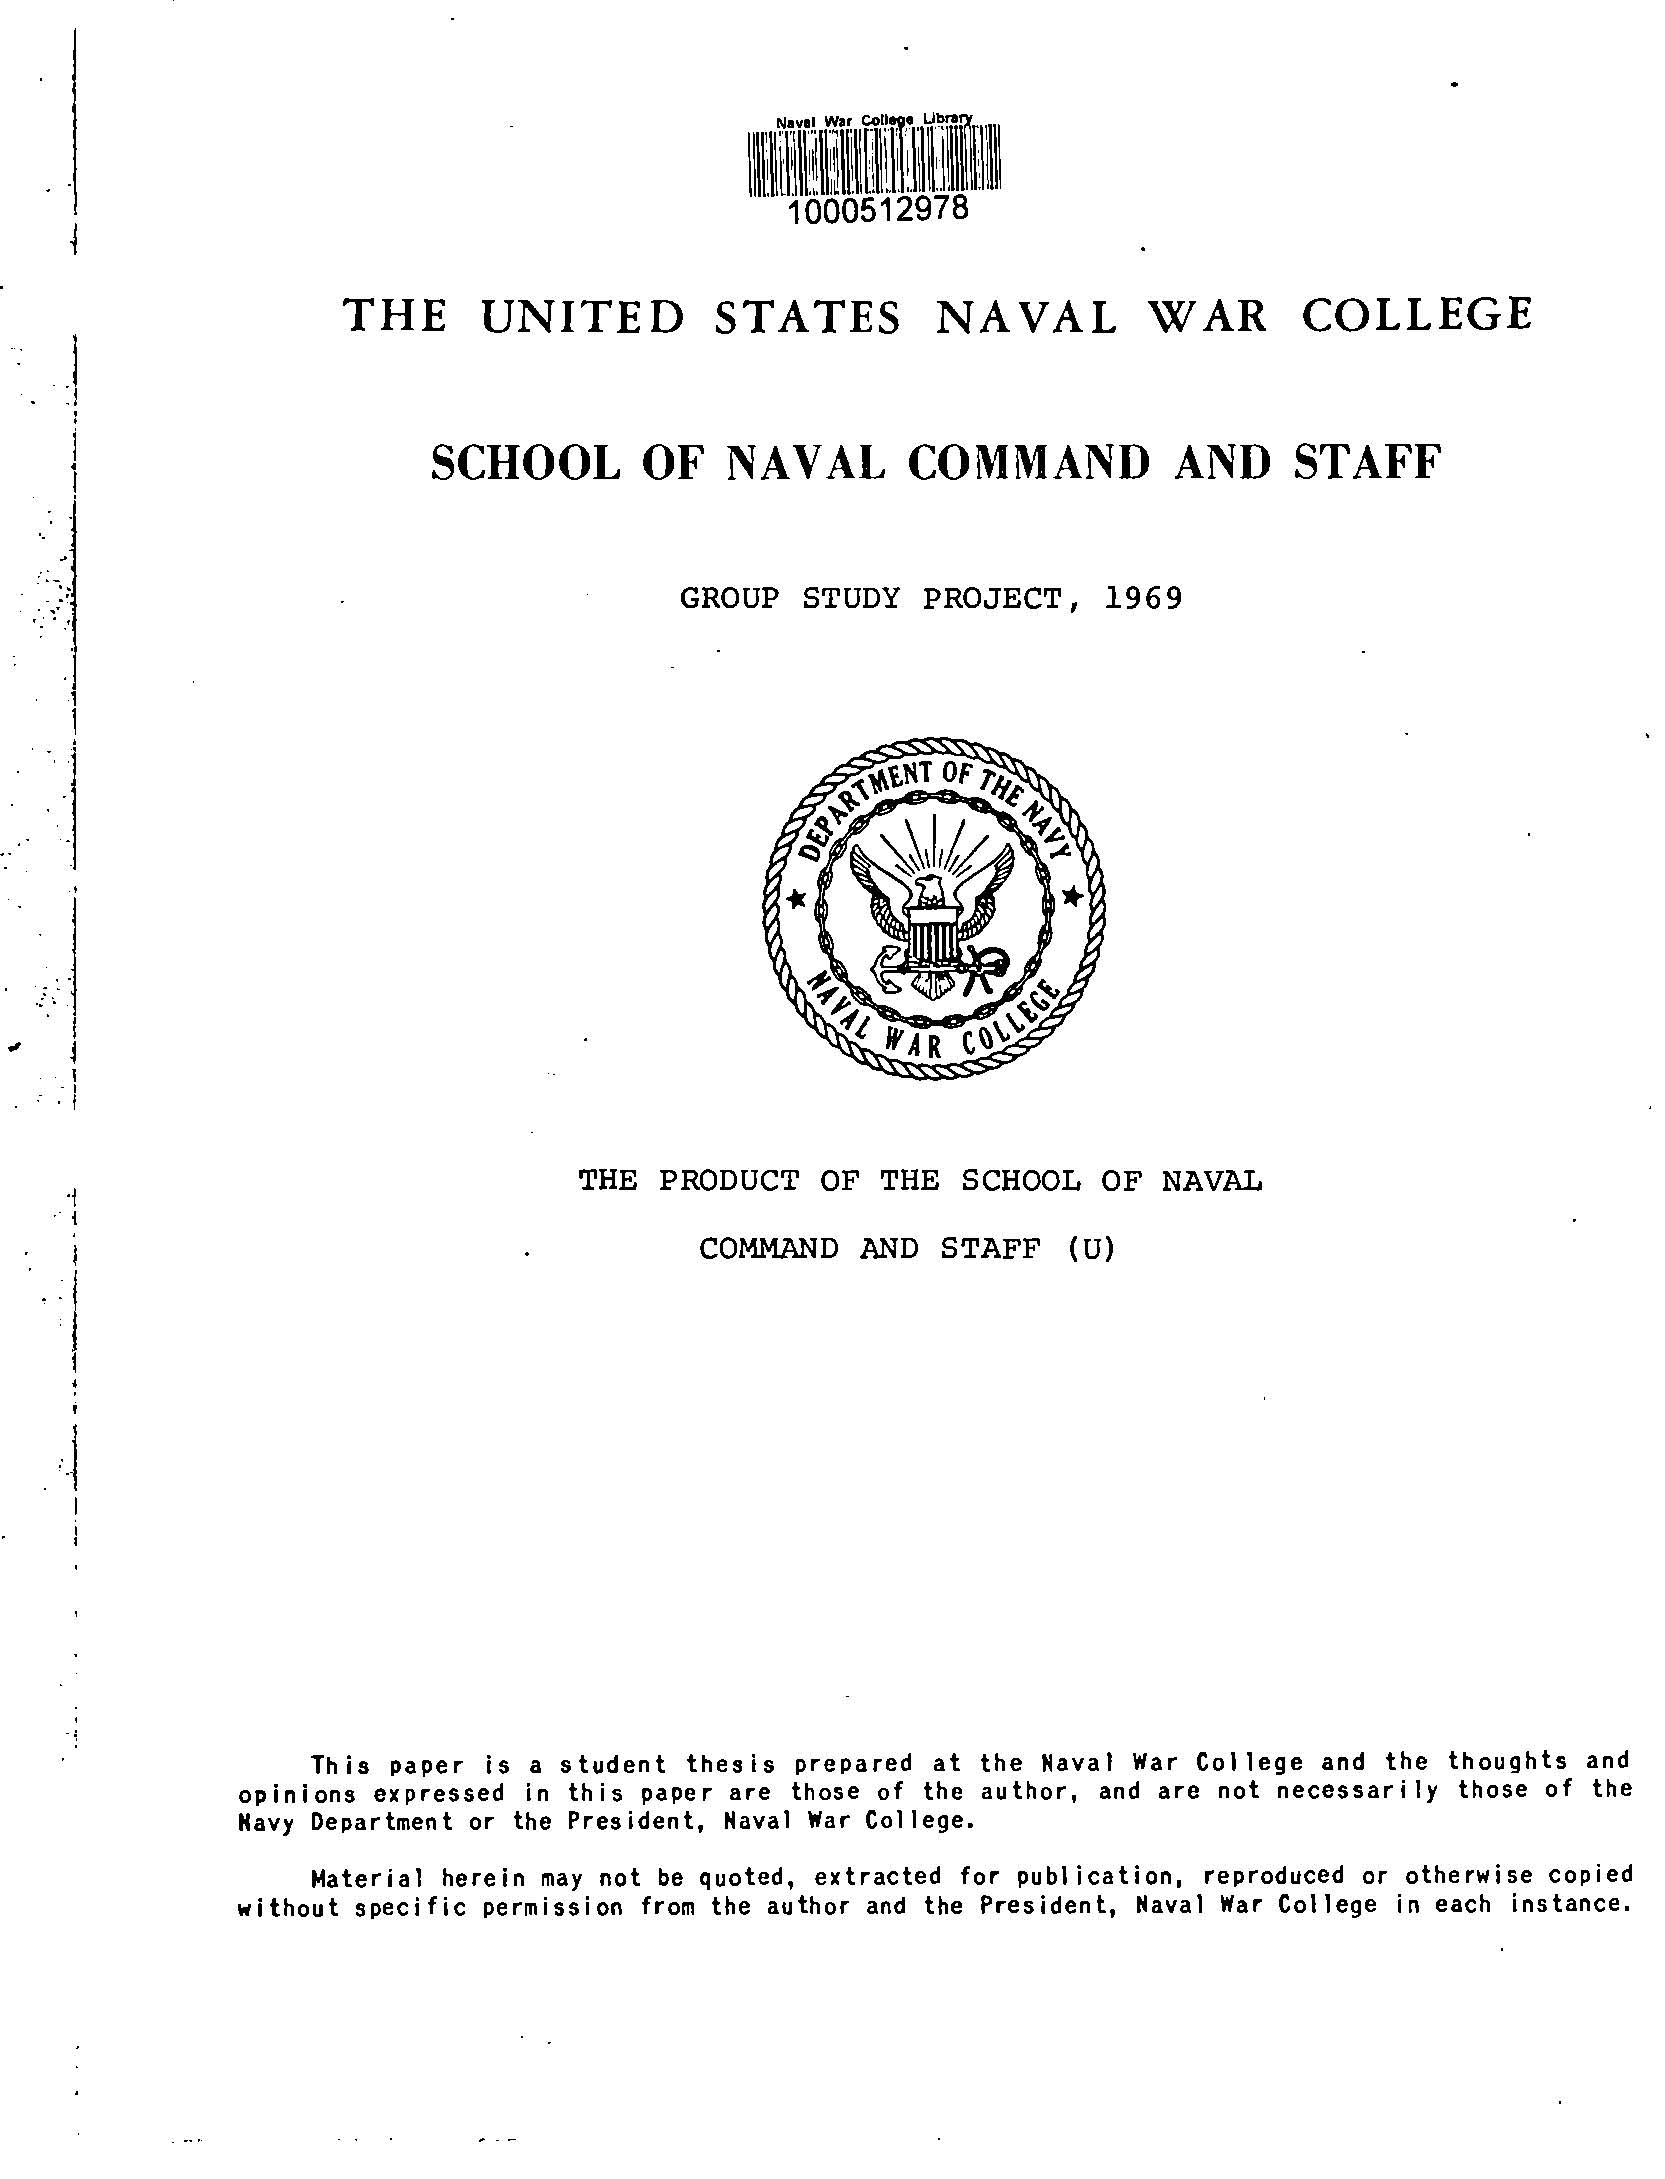 Product of the School of Naval Command and Staff, by John W. Grunenwald; James A. Barber; Thomas L. Vannaman; Alvin H. Allnutt; Thomas C. Weller, Jr.; Rudolph S. Malooley; John L. Easterwood, Jr.; and Gunars Kilpe: 